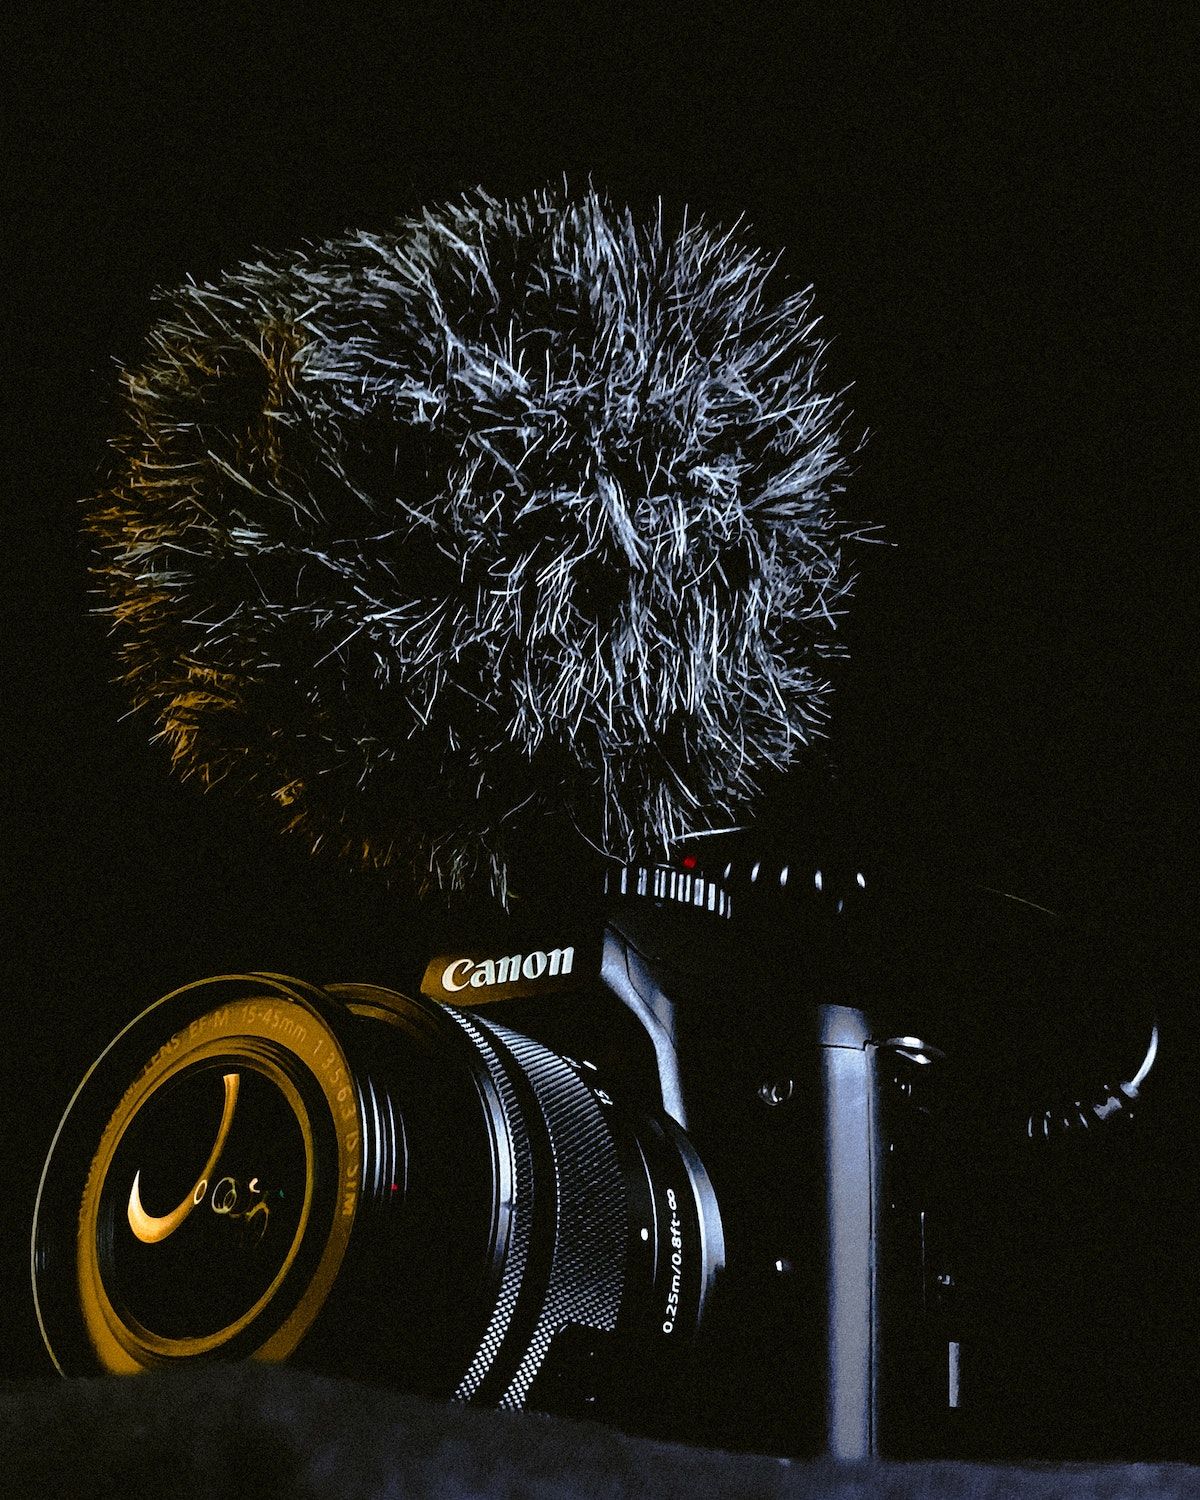 Canon EOS M50 Mark II video capabilities